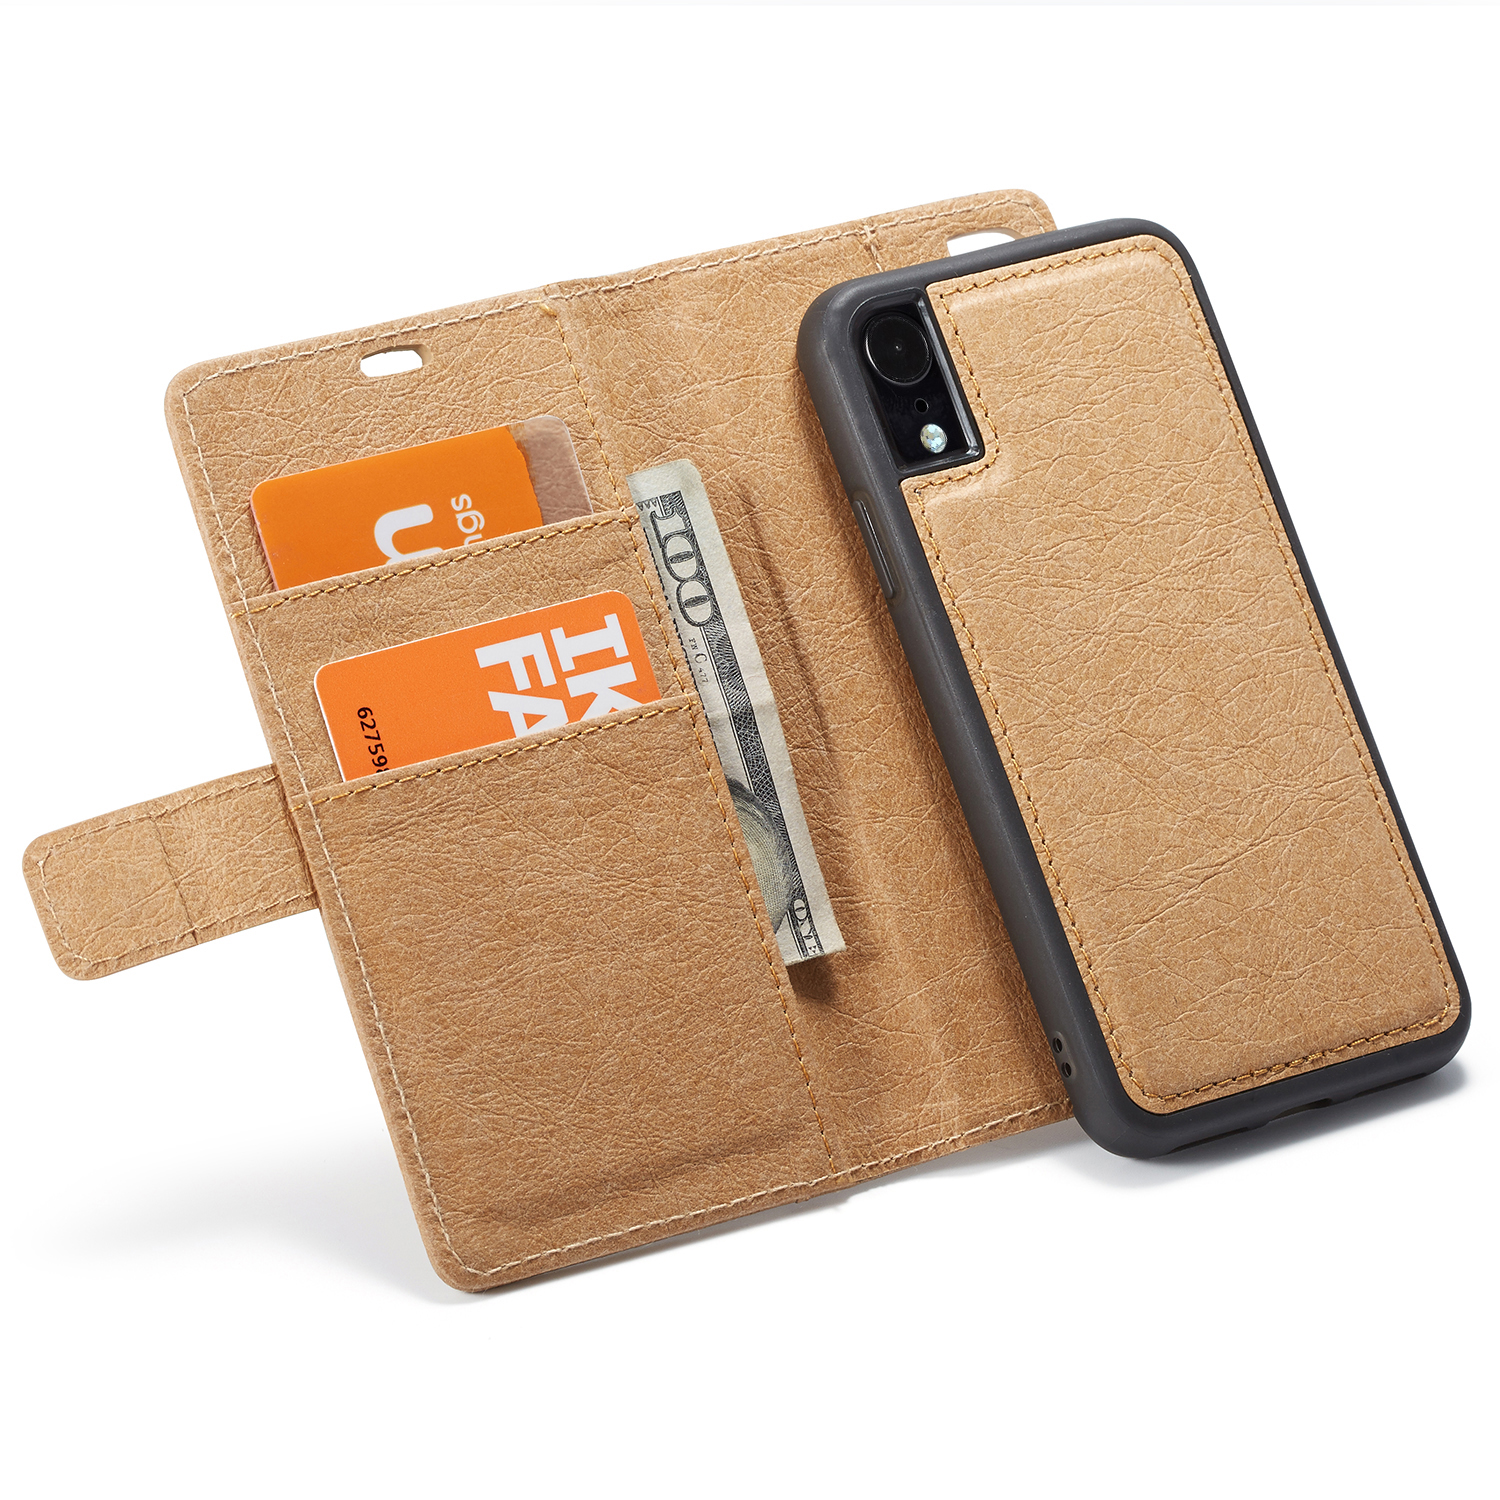 

WHATIF Защитный Чехол для iPhone XR Водонепроницаемы Крафт-бумага Магнитный съемный кошелек